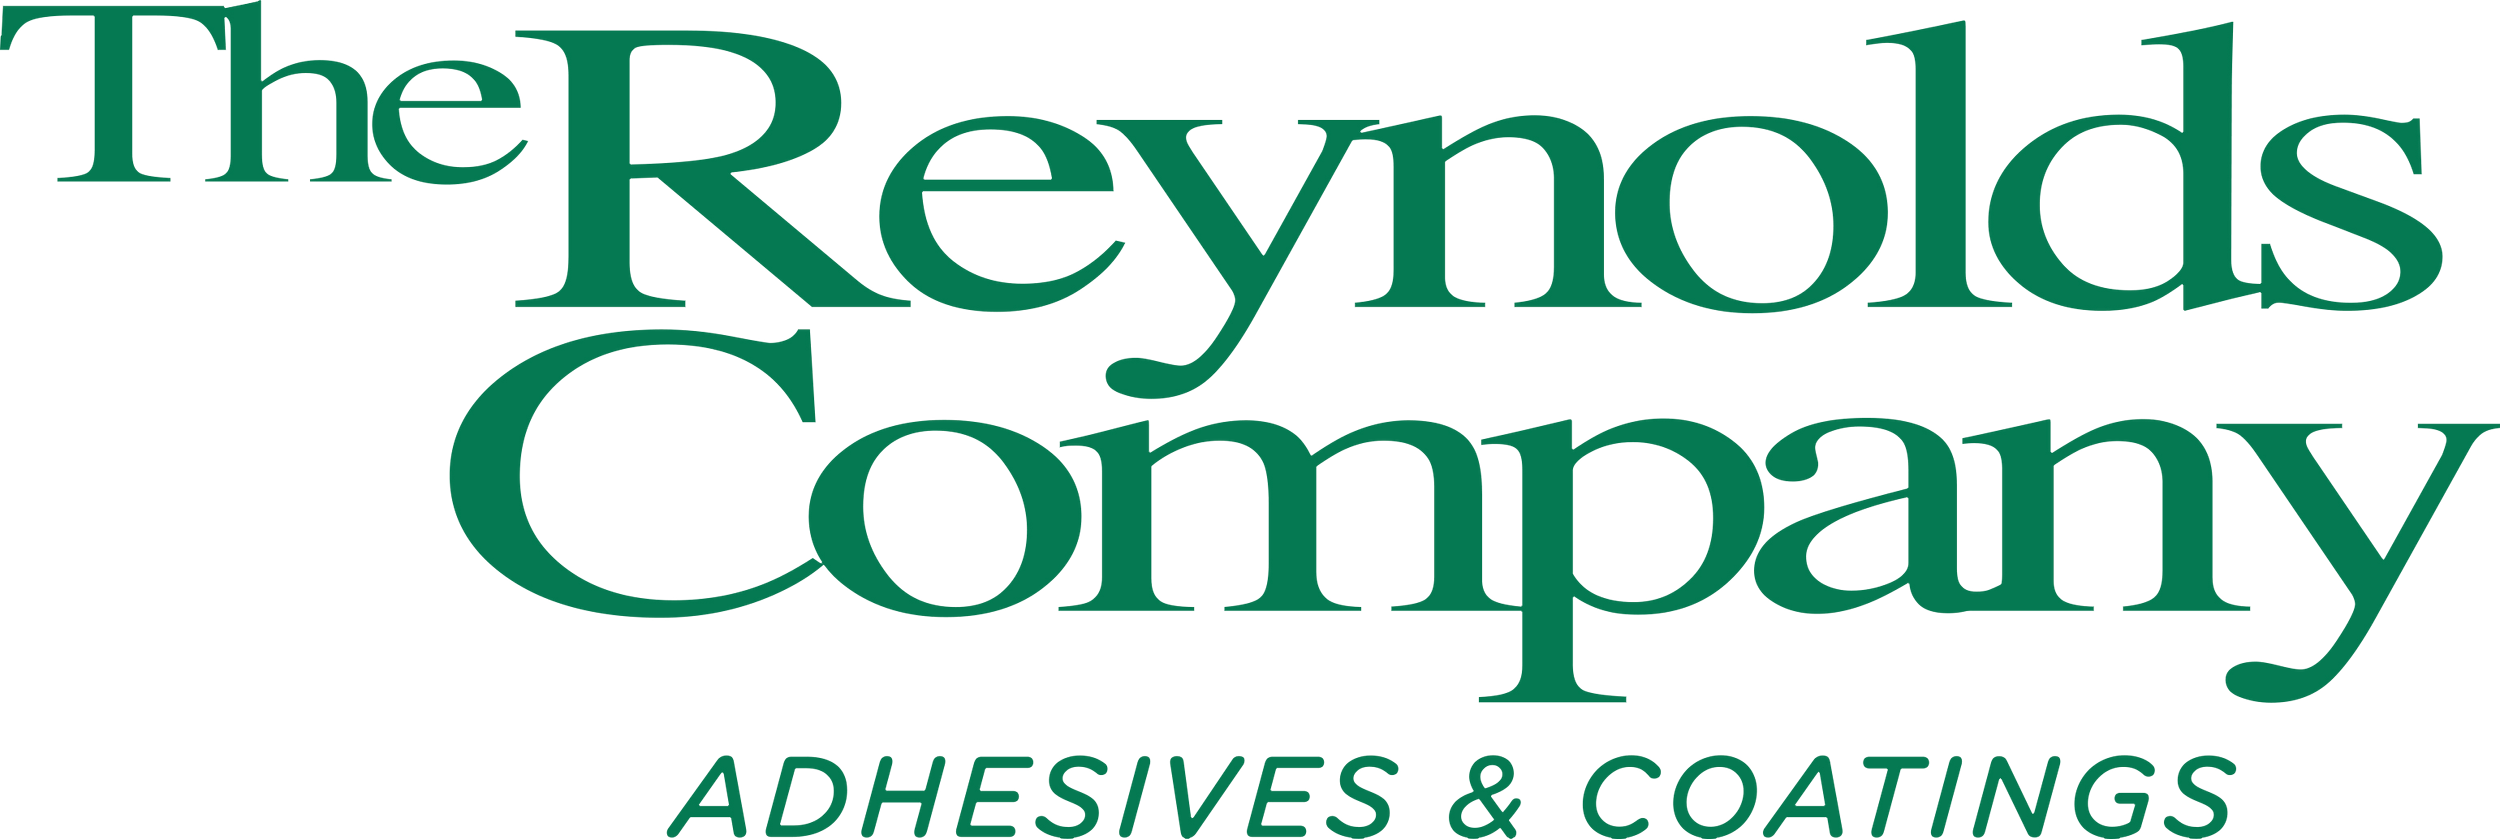 Reynolds Company Logo.png